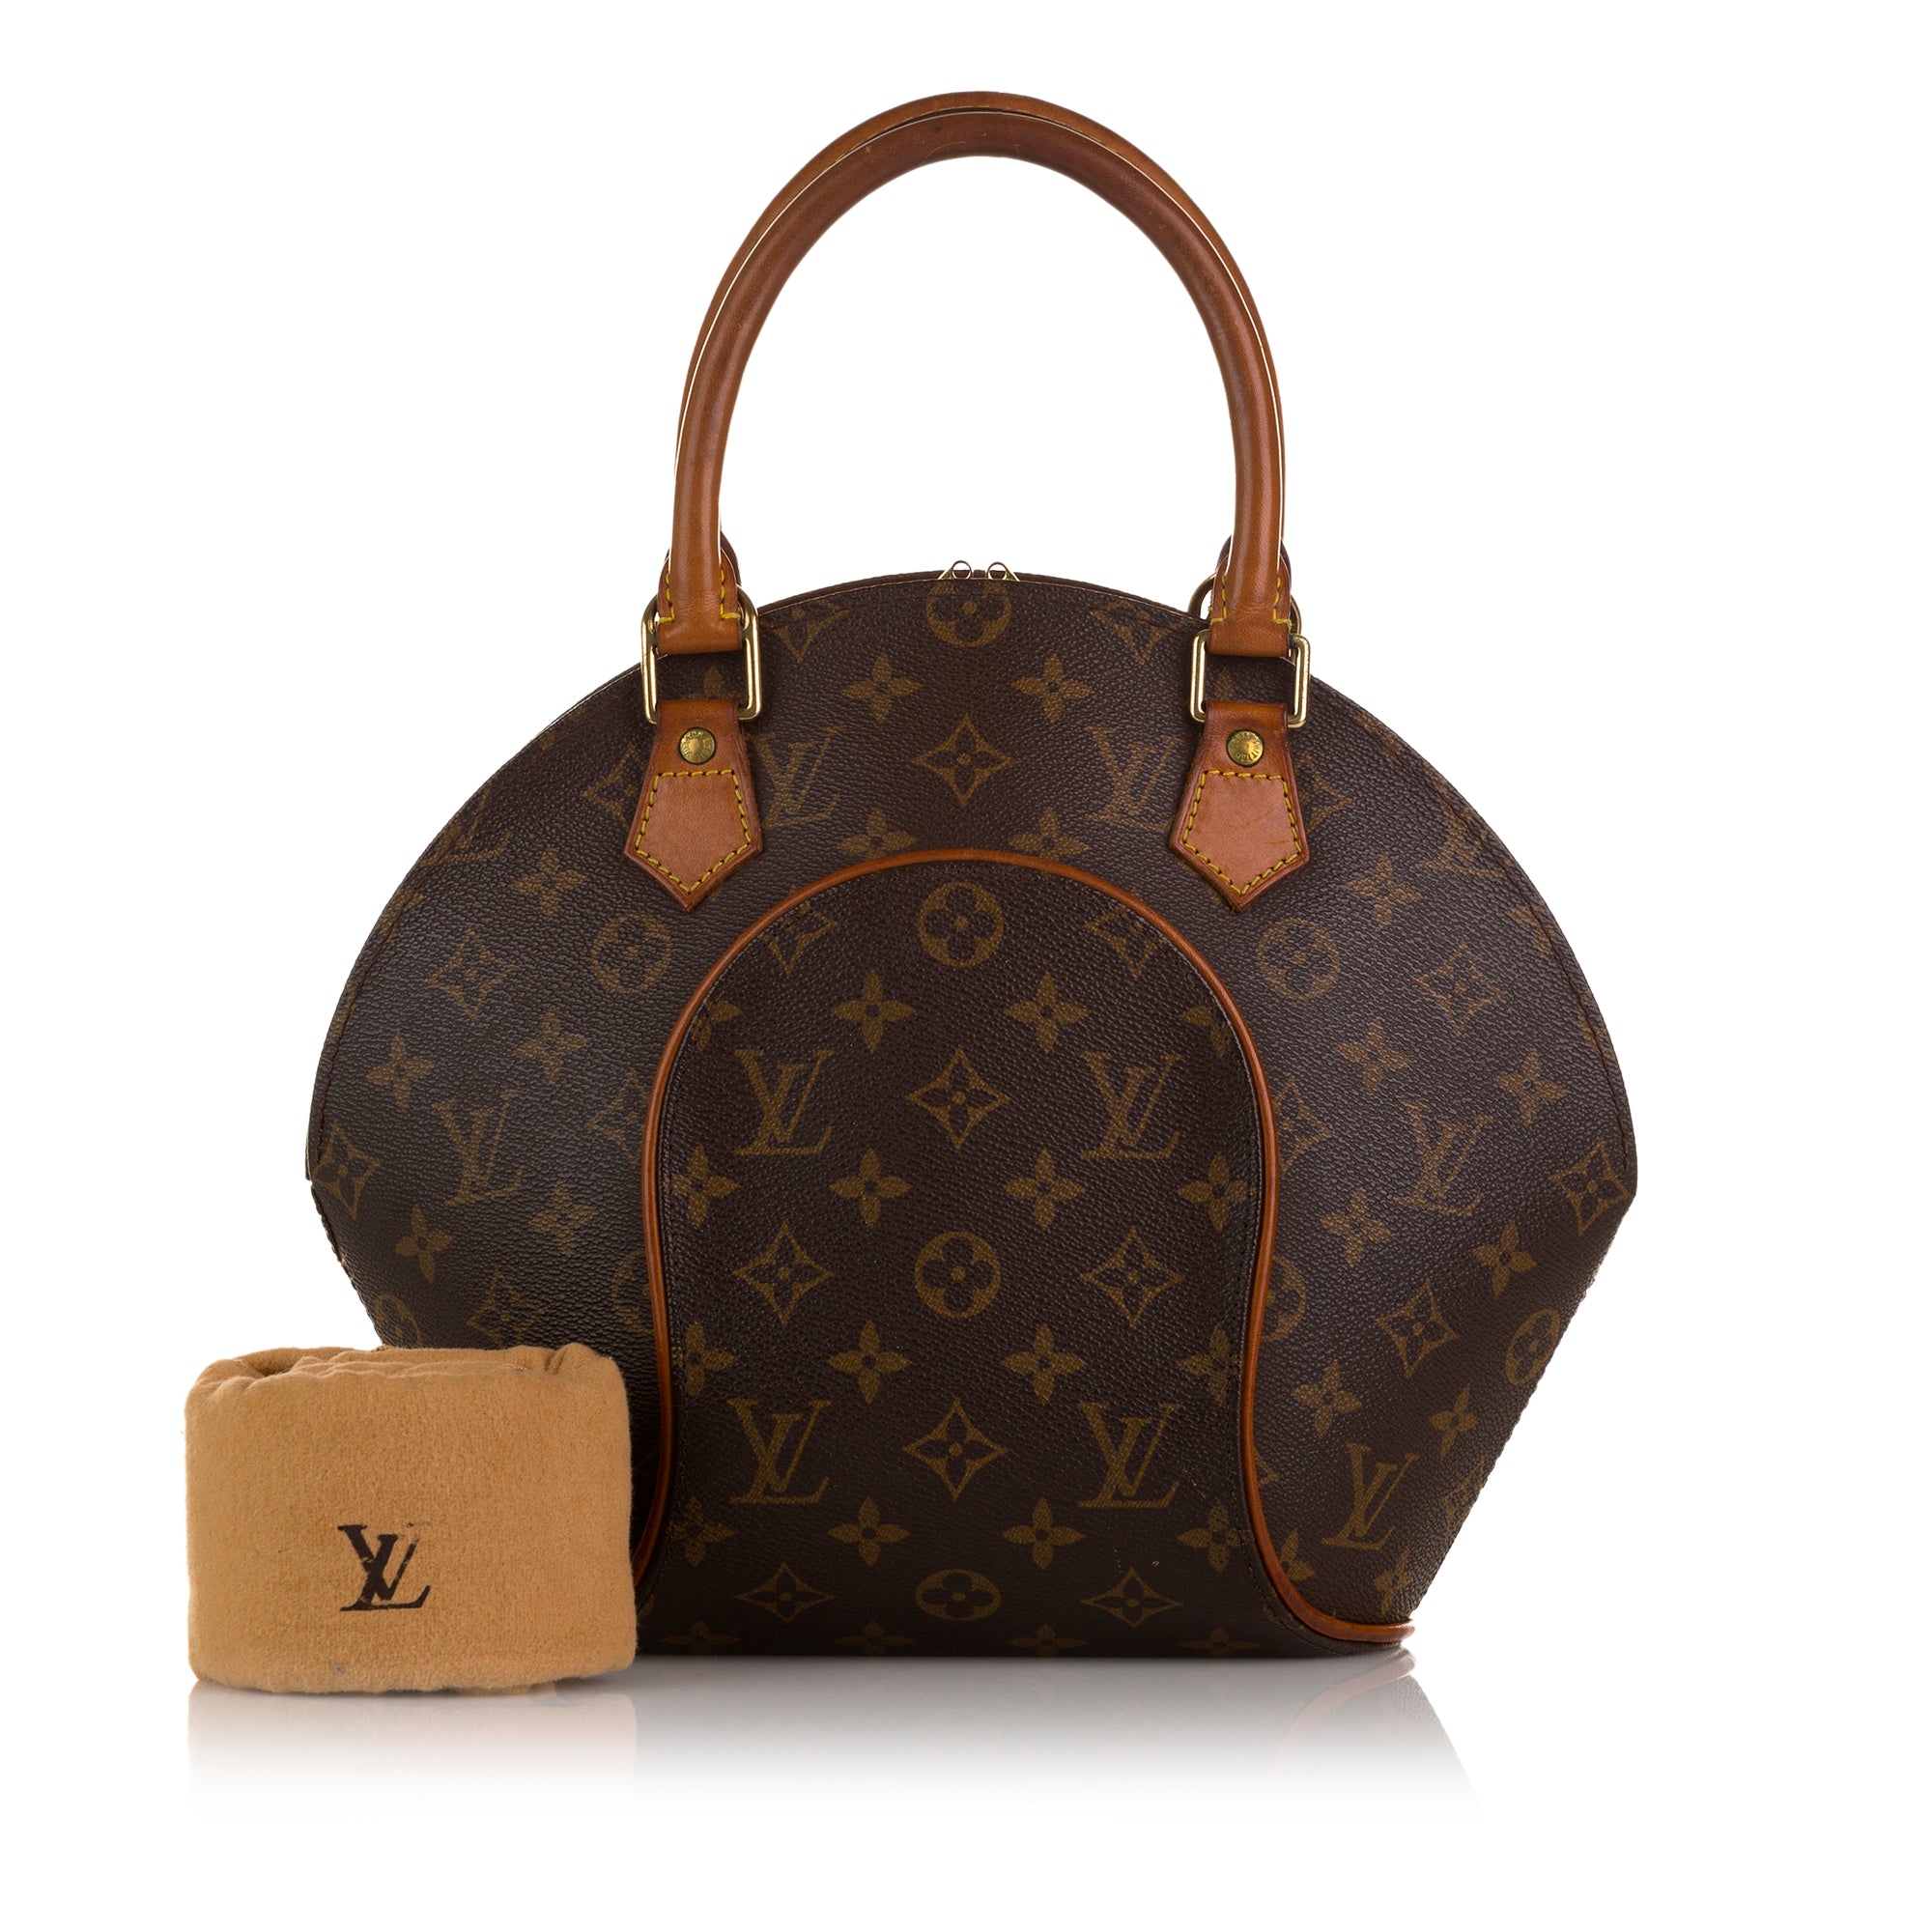 100% authenticity Guaranteed - Louis Vuitton Ellipse PM